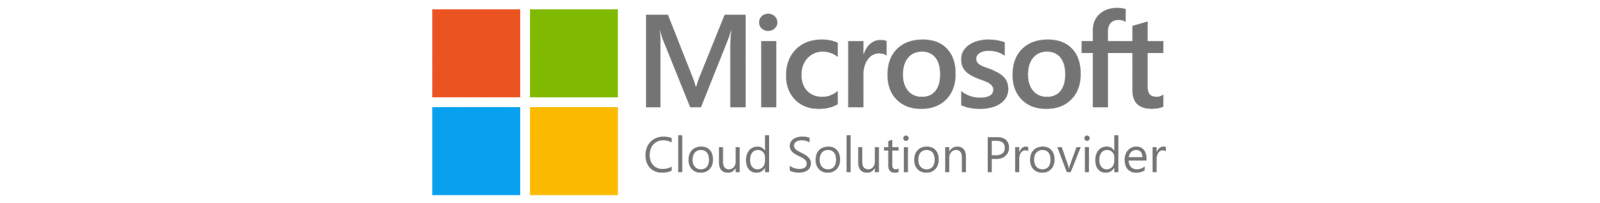 Microsoft Cloud Solution Provider Logo 1600px